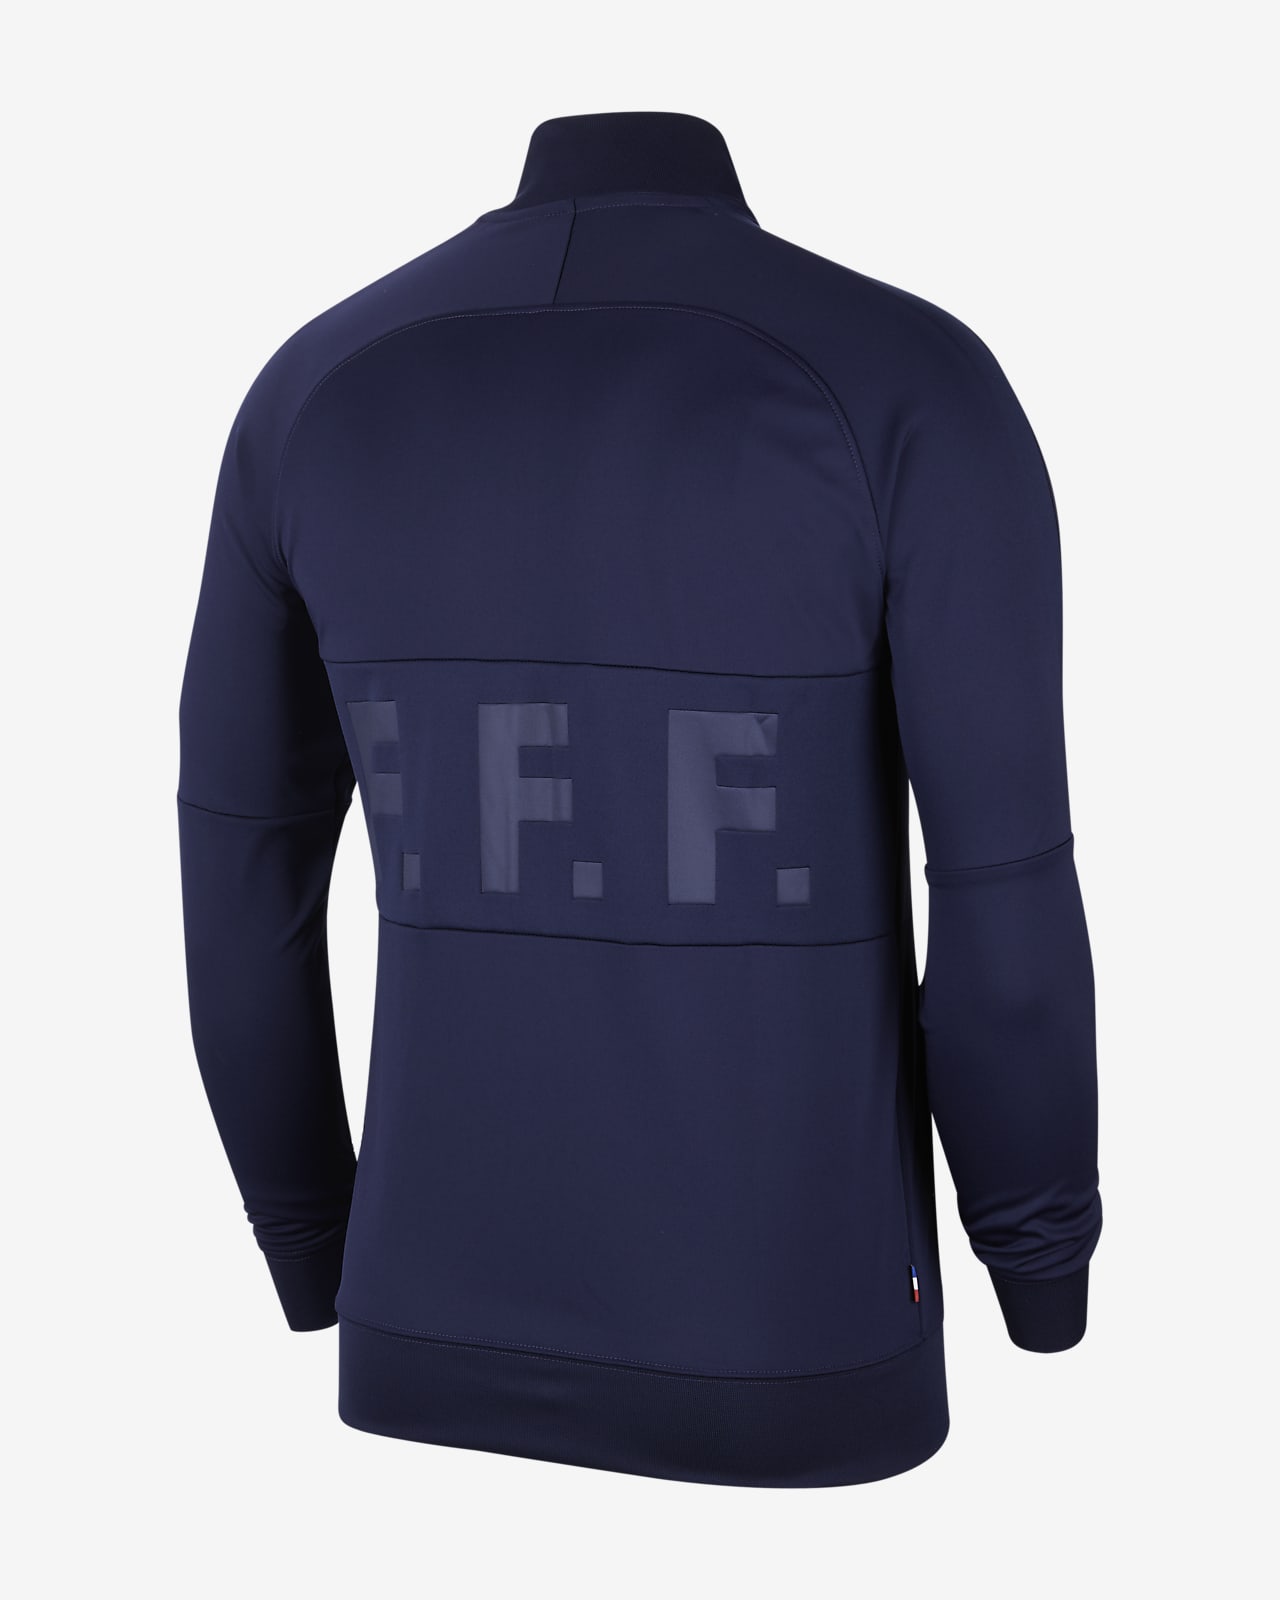 fff jacket